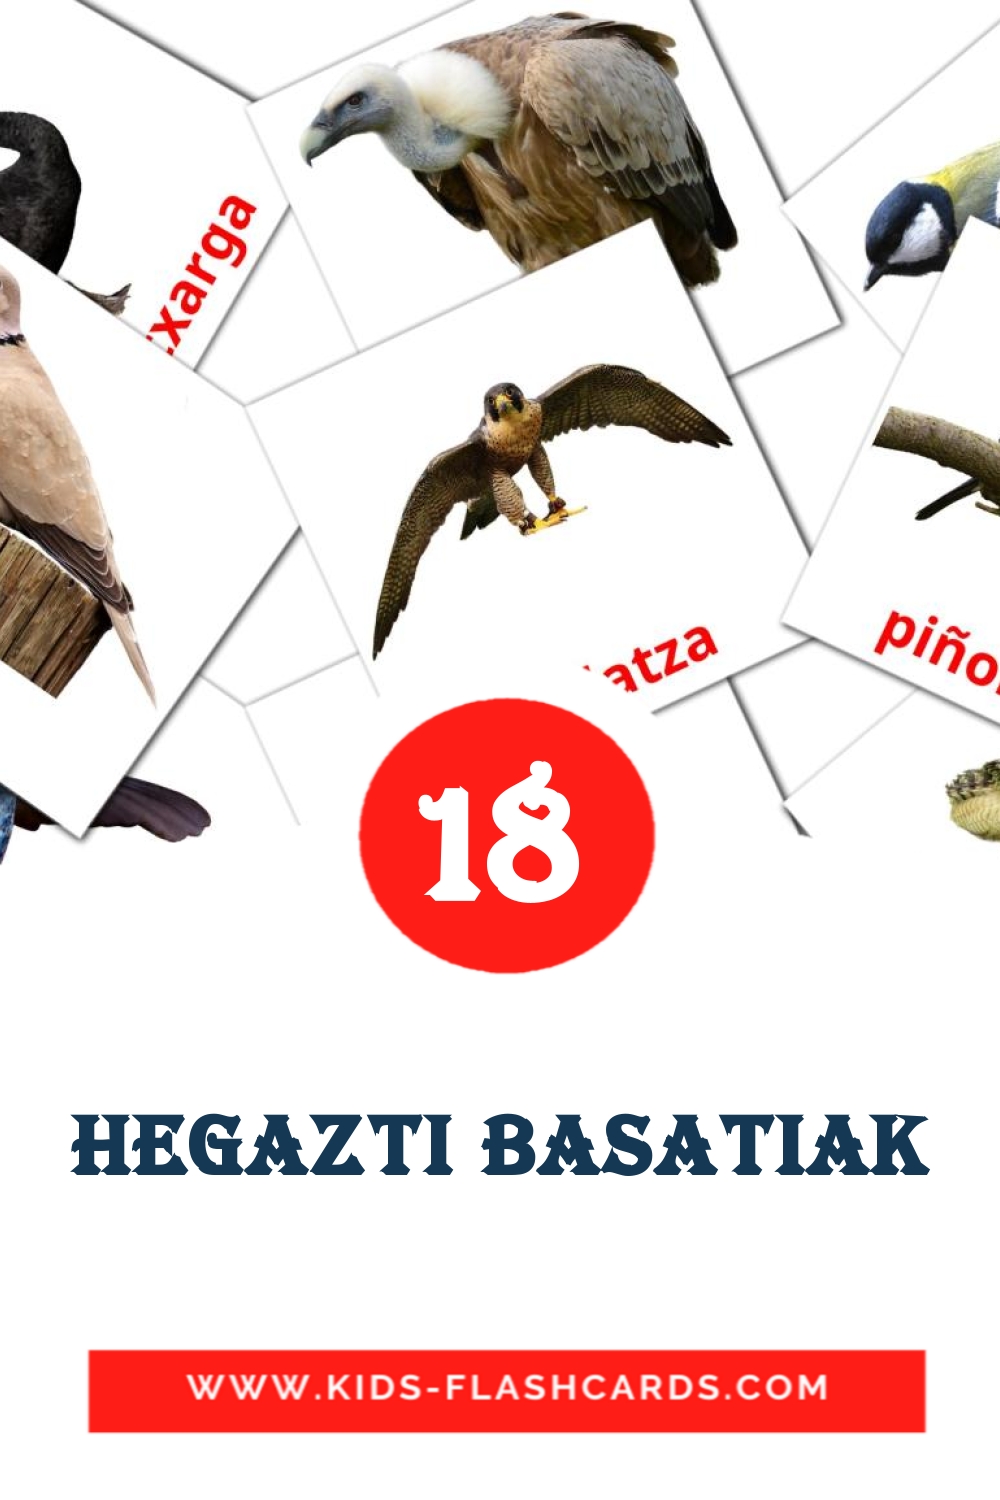 18 carte illustrate di Hegazti basatiak per la scuola materna in basco